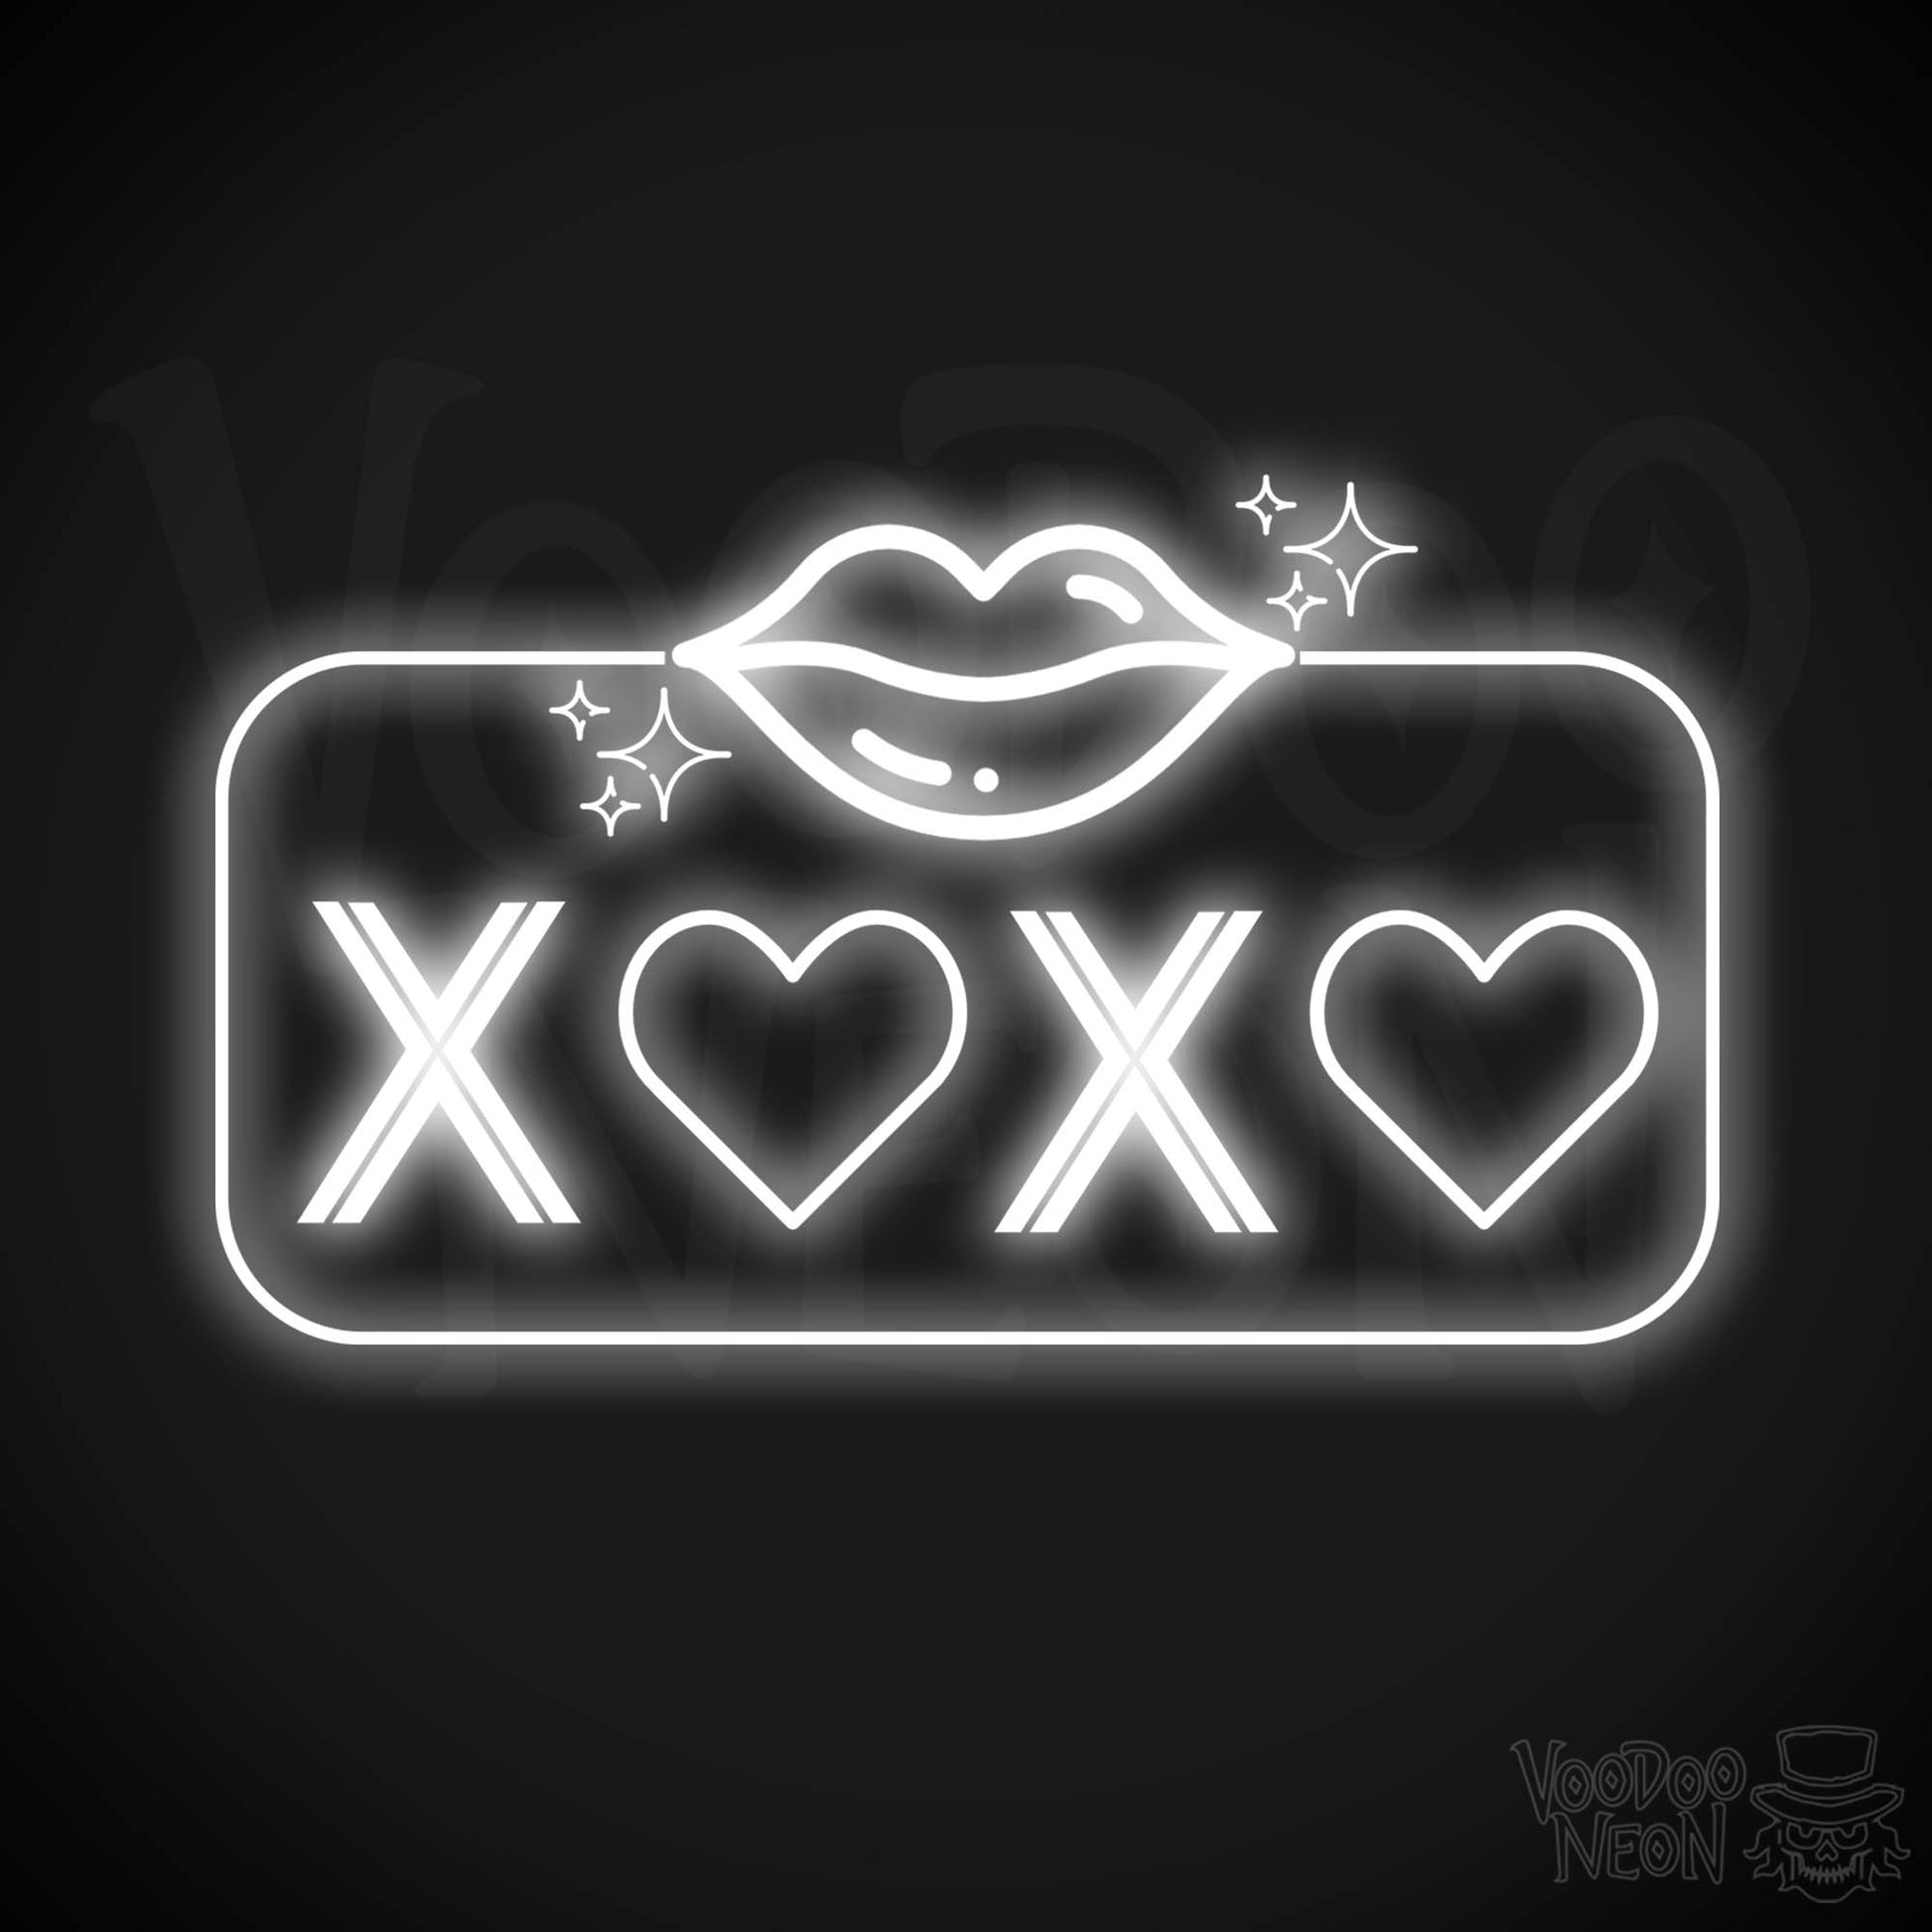 Xoxo Neon Sign - Neon XOXO - Kiss Hug Neon Wall Art - Color White